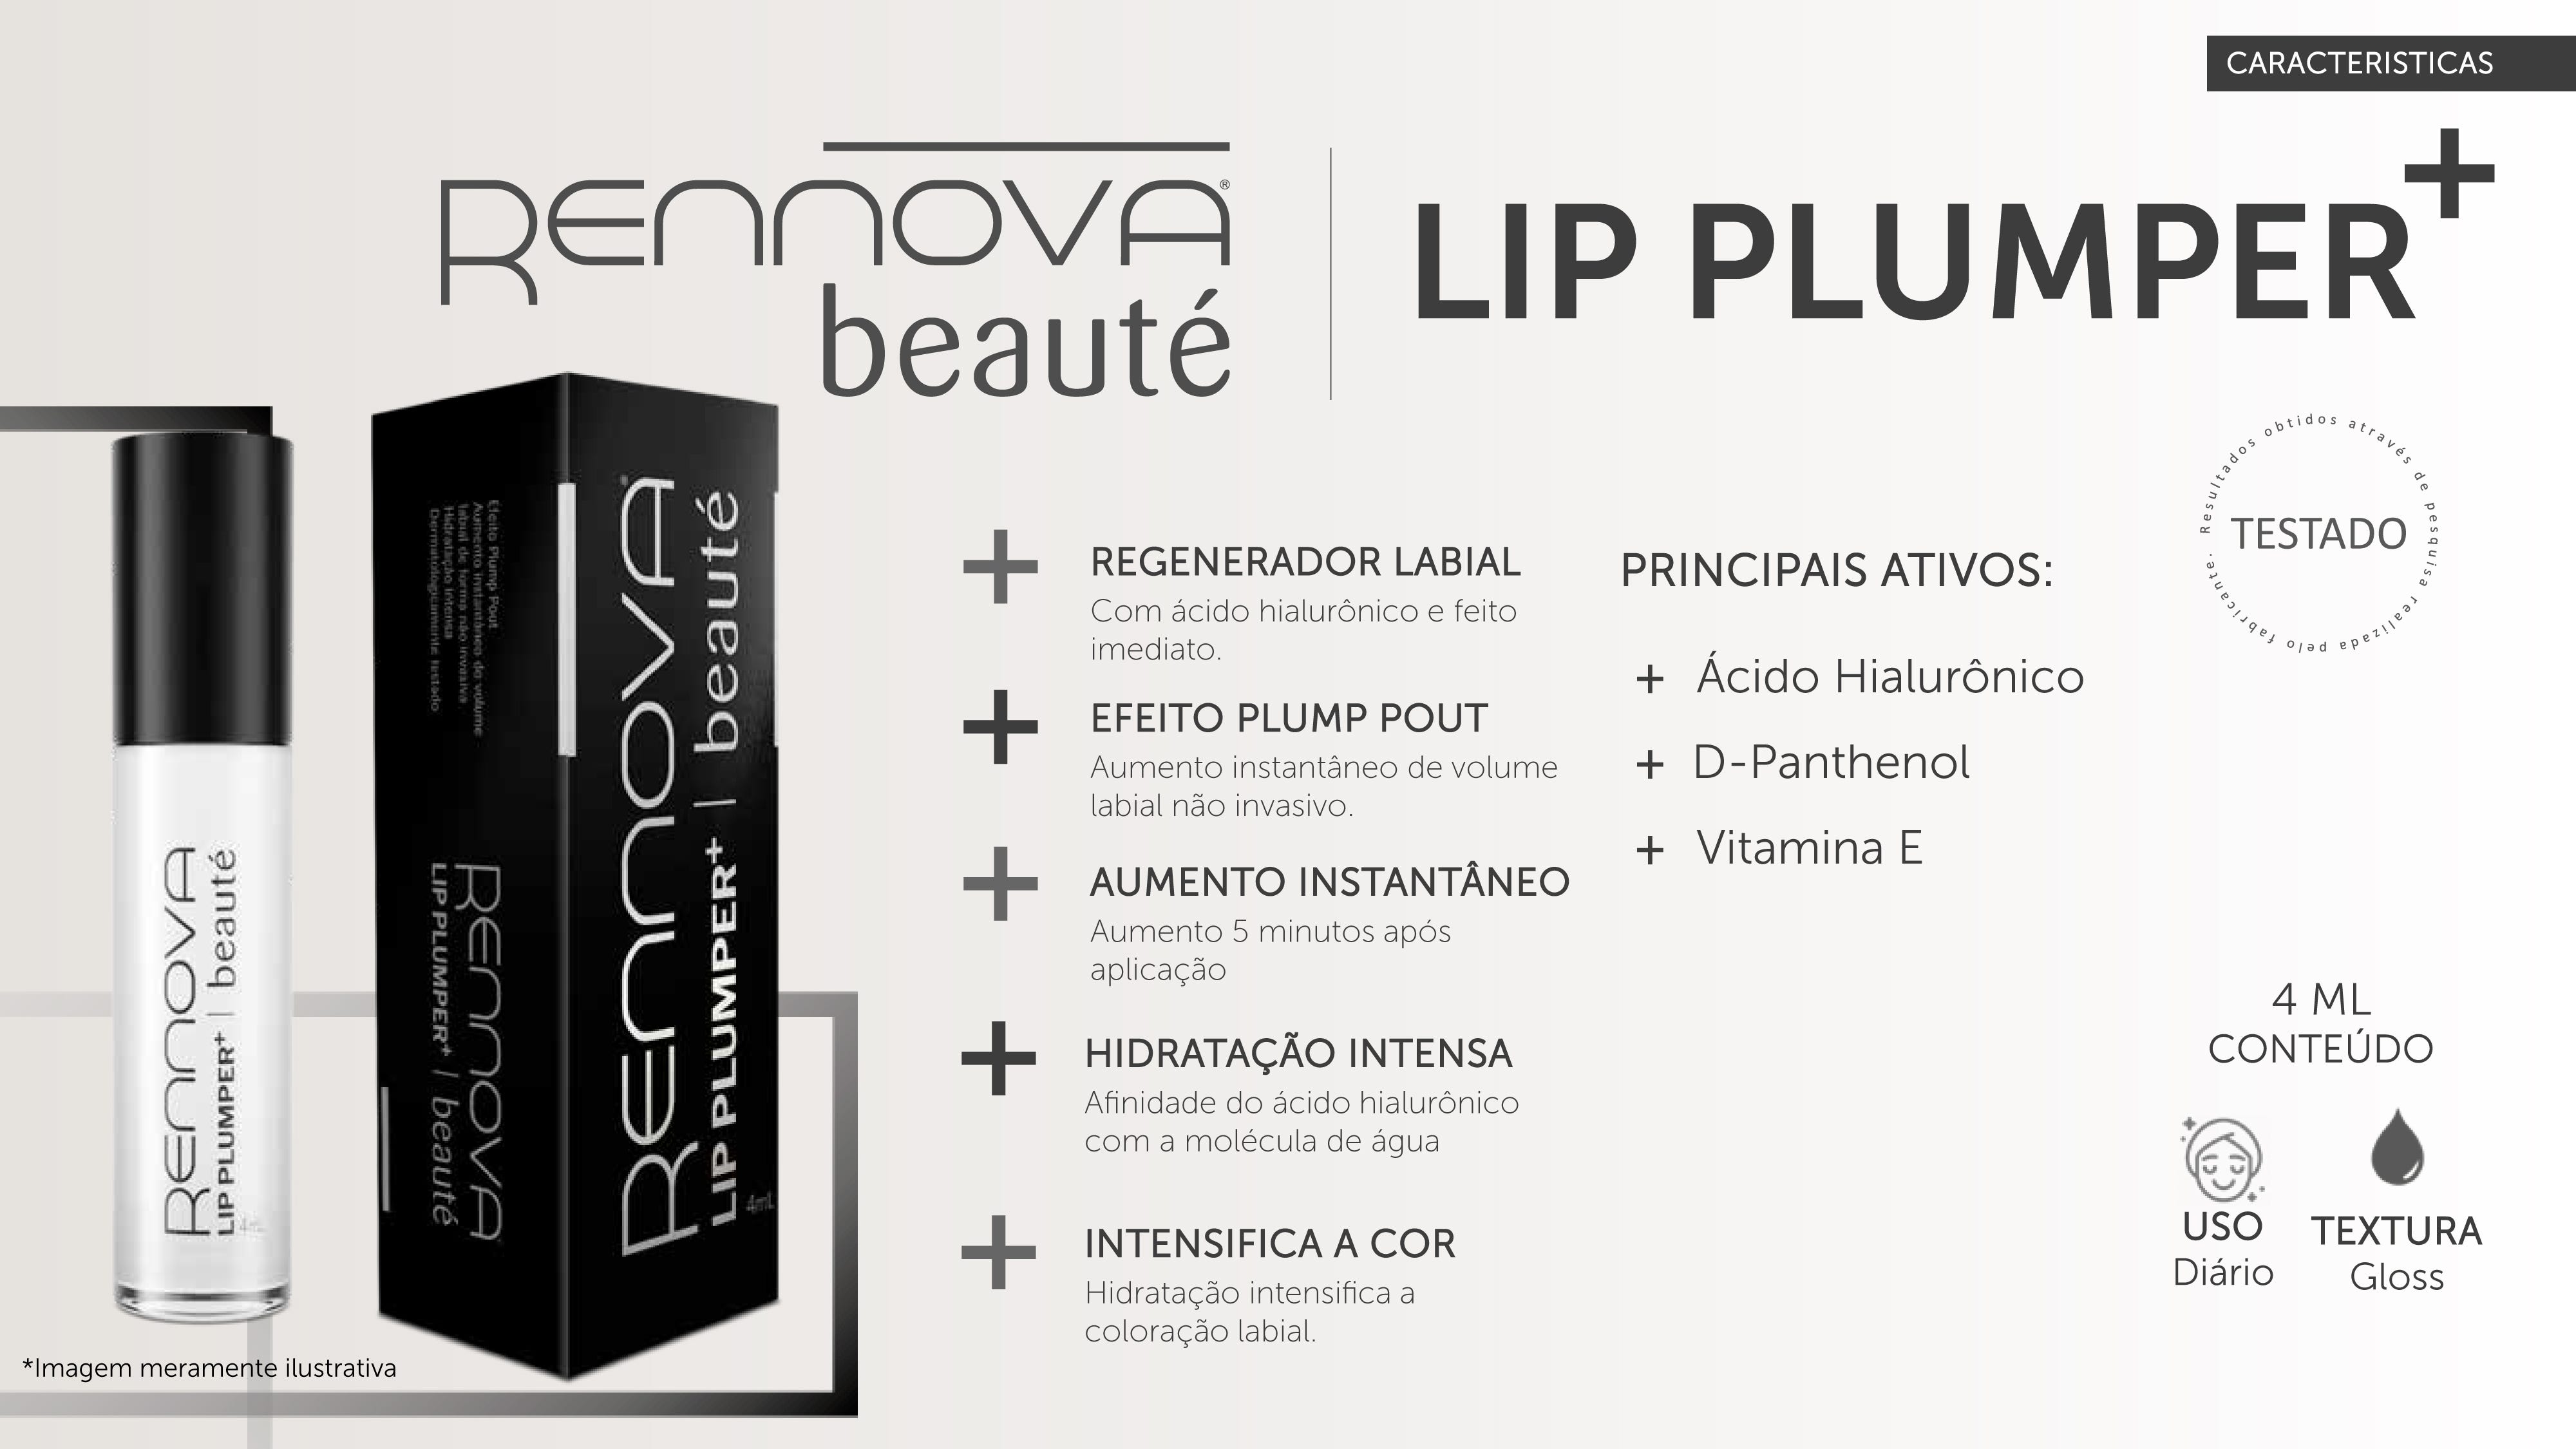 Detalhes sobre o Lip Plumper Beaute Rennova